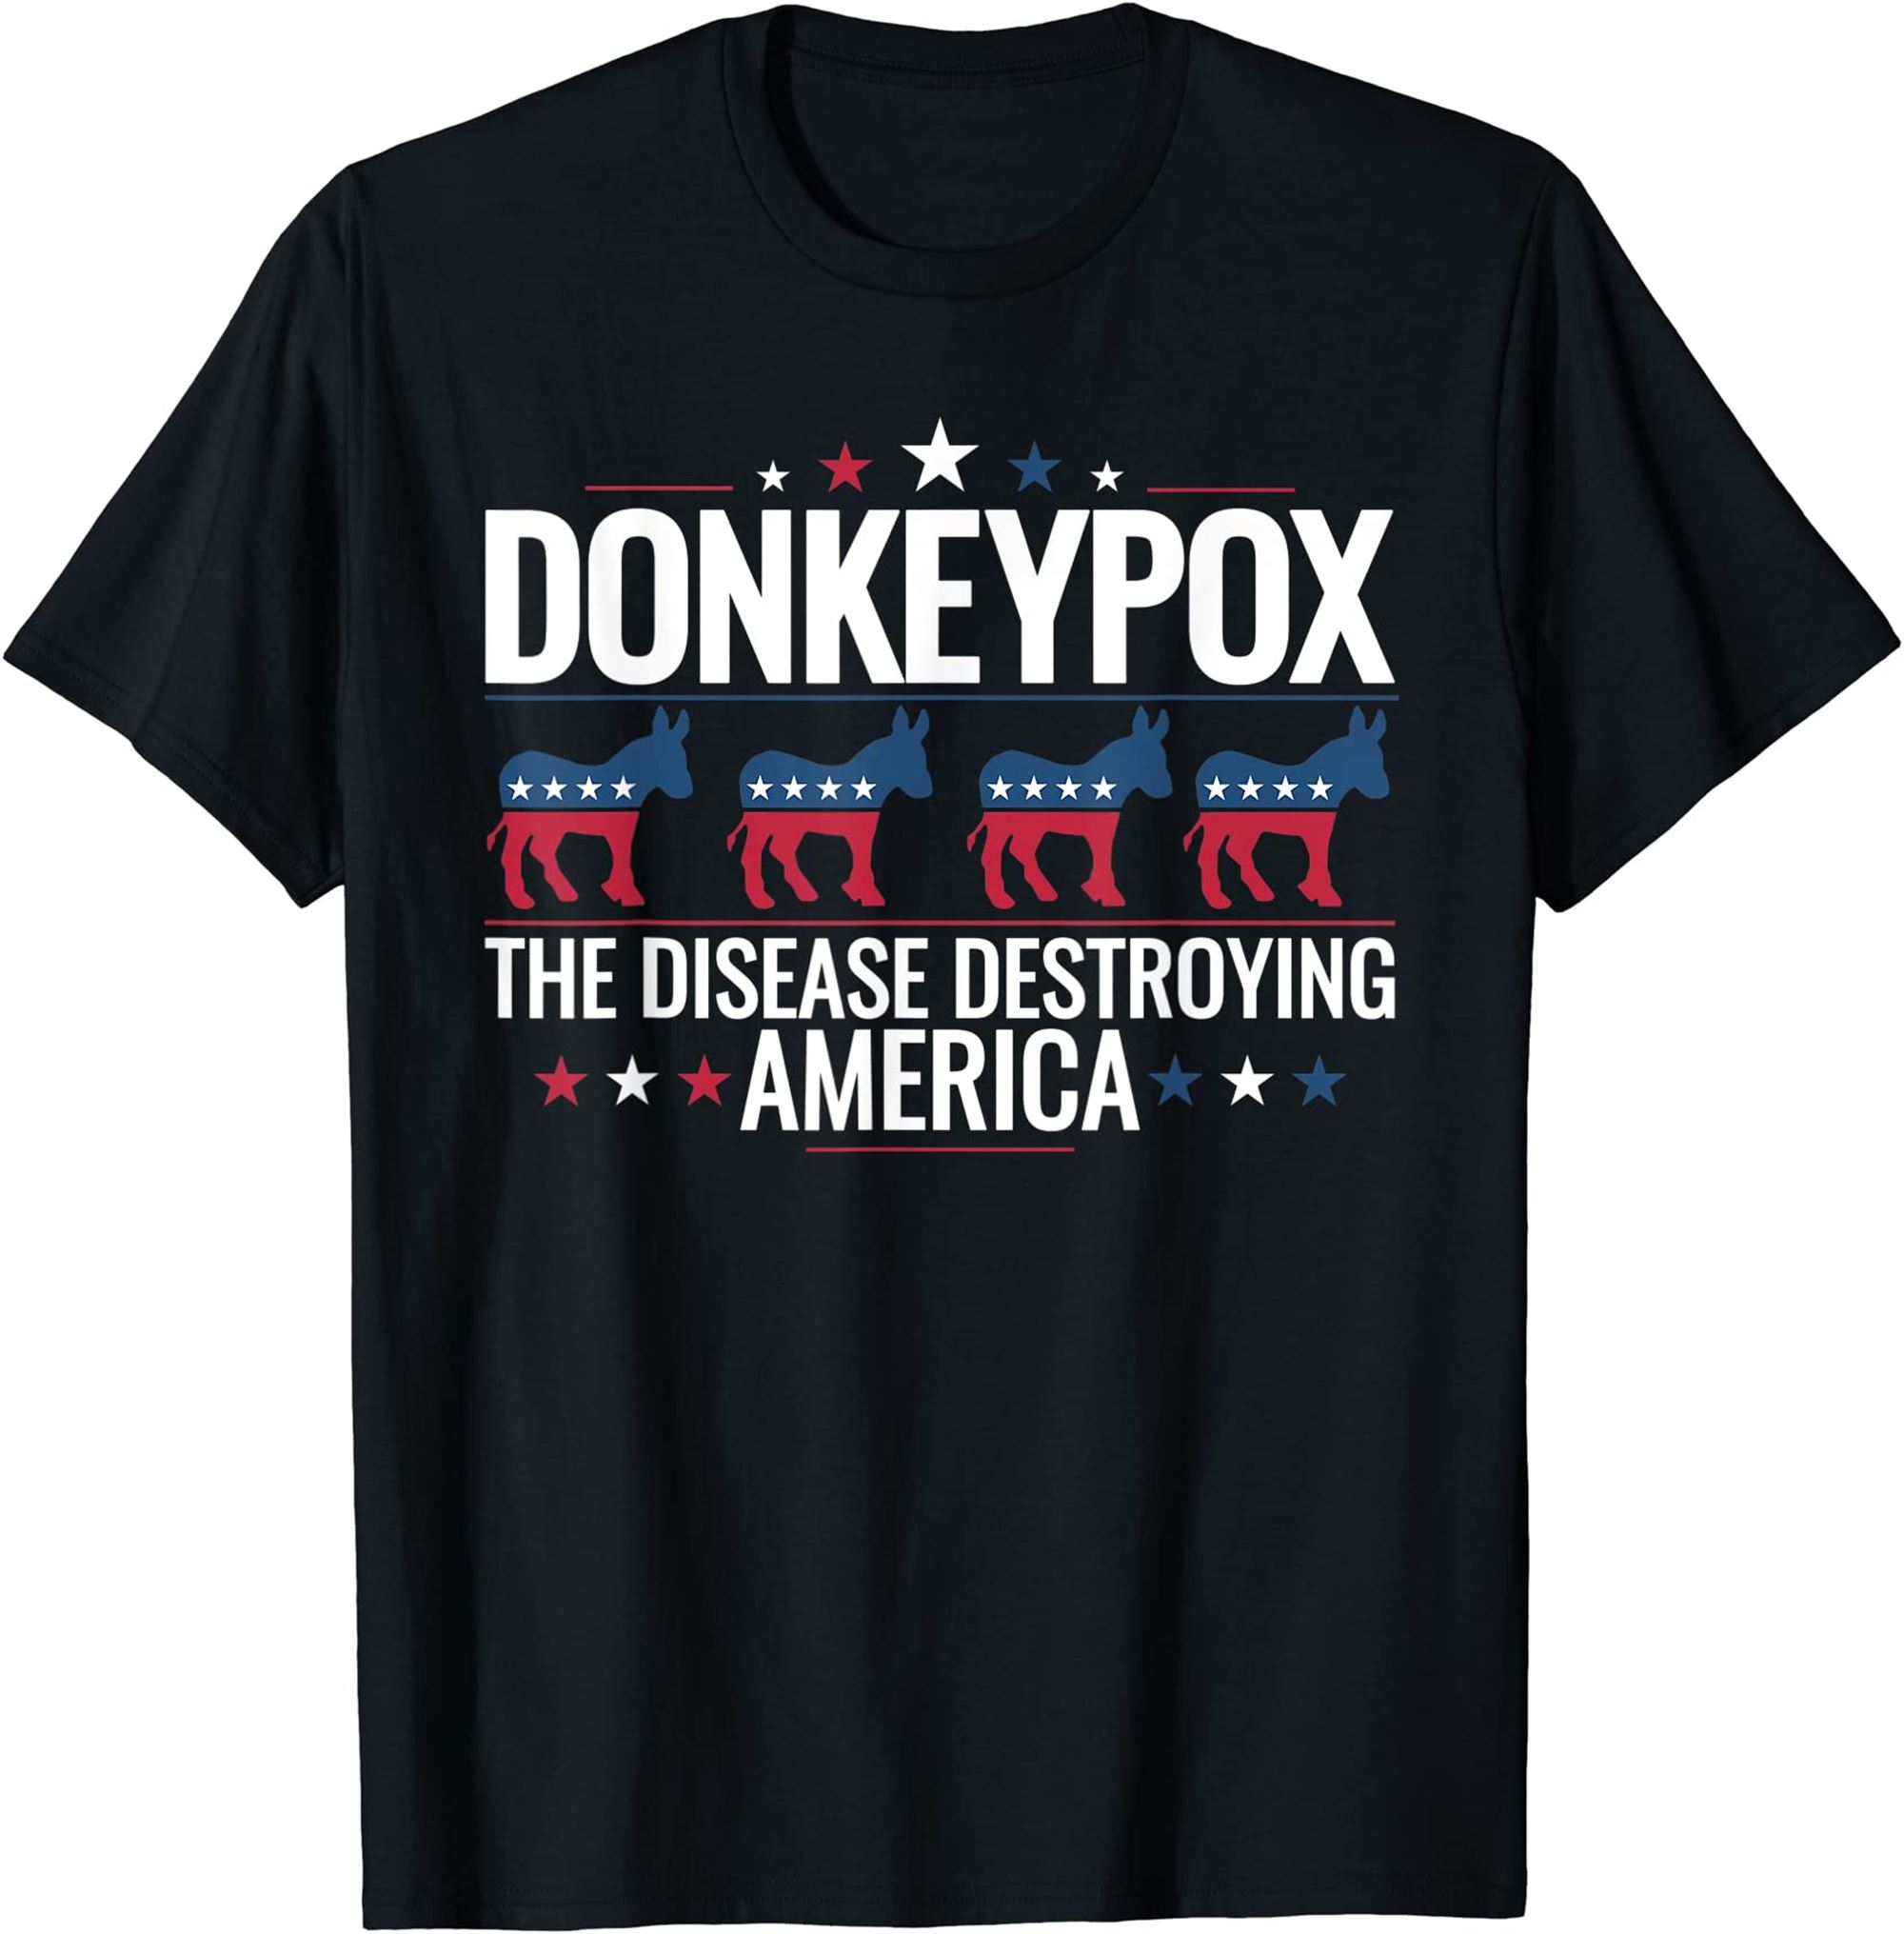 Donkey Pox The Disease Destroying America Funny Donkeypox T-shirt Plus Size Up To 5xl